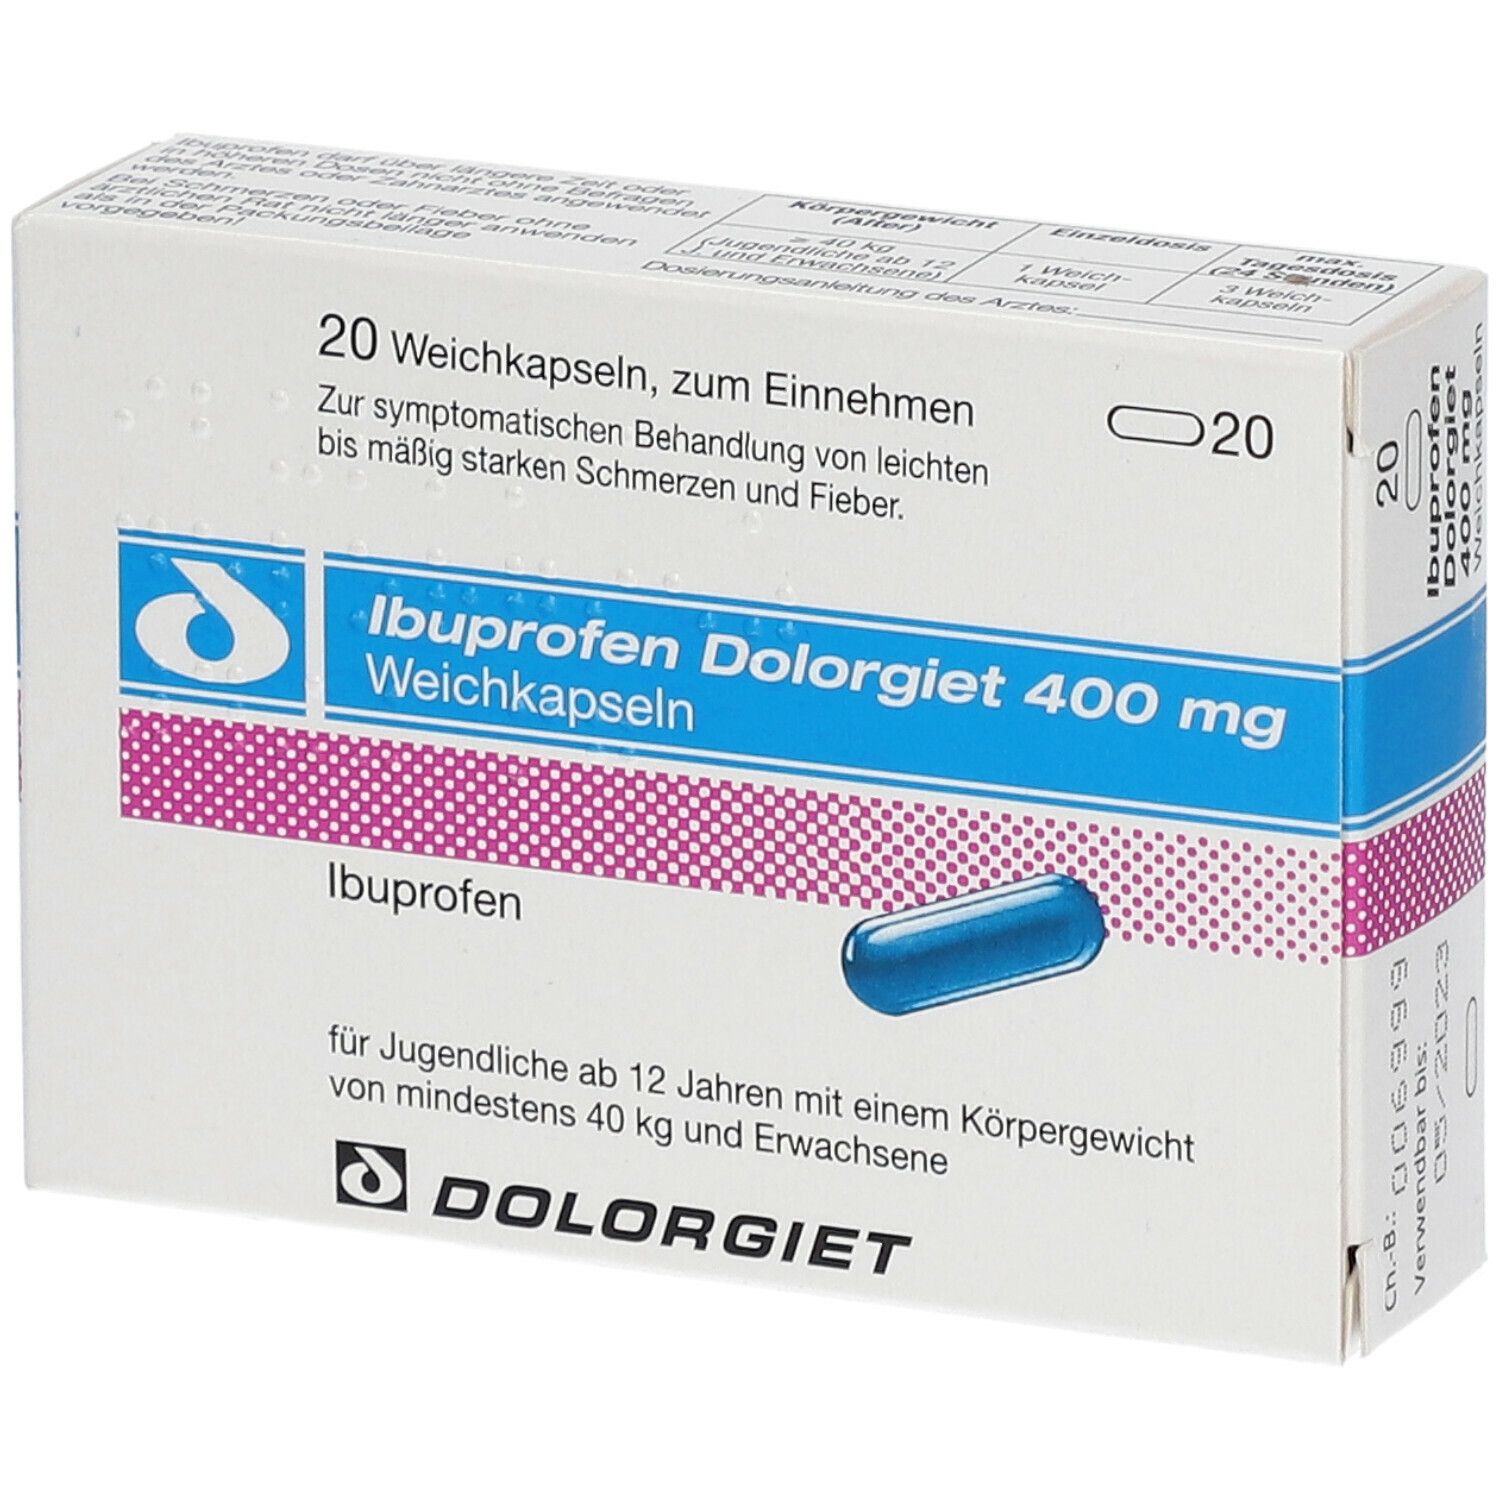 Ibuprofen Dolorgiet 400 mg